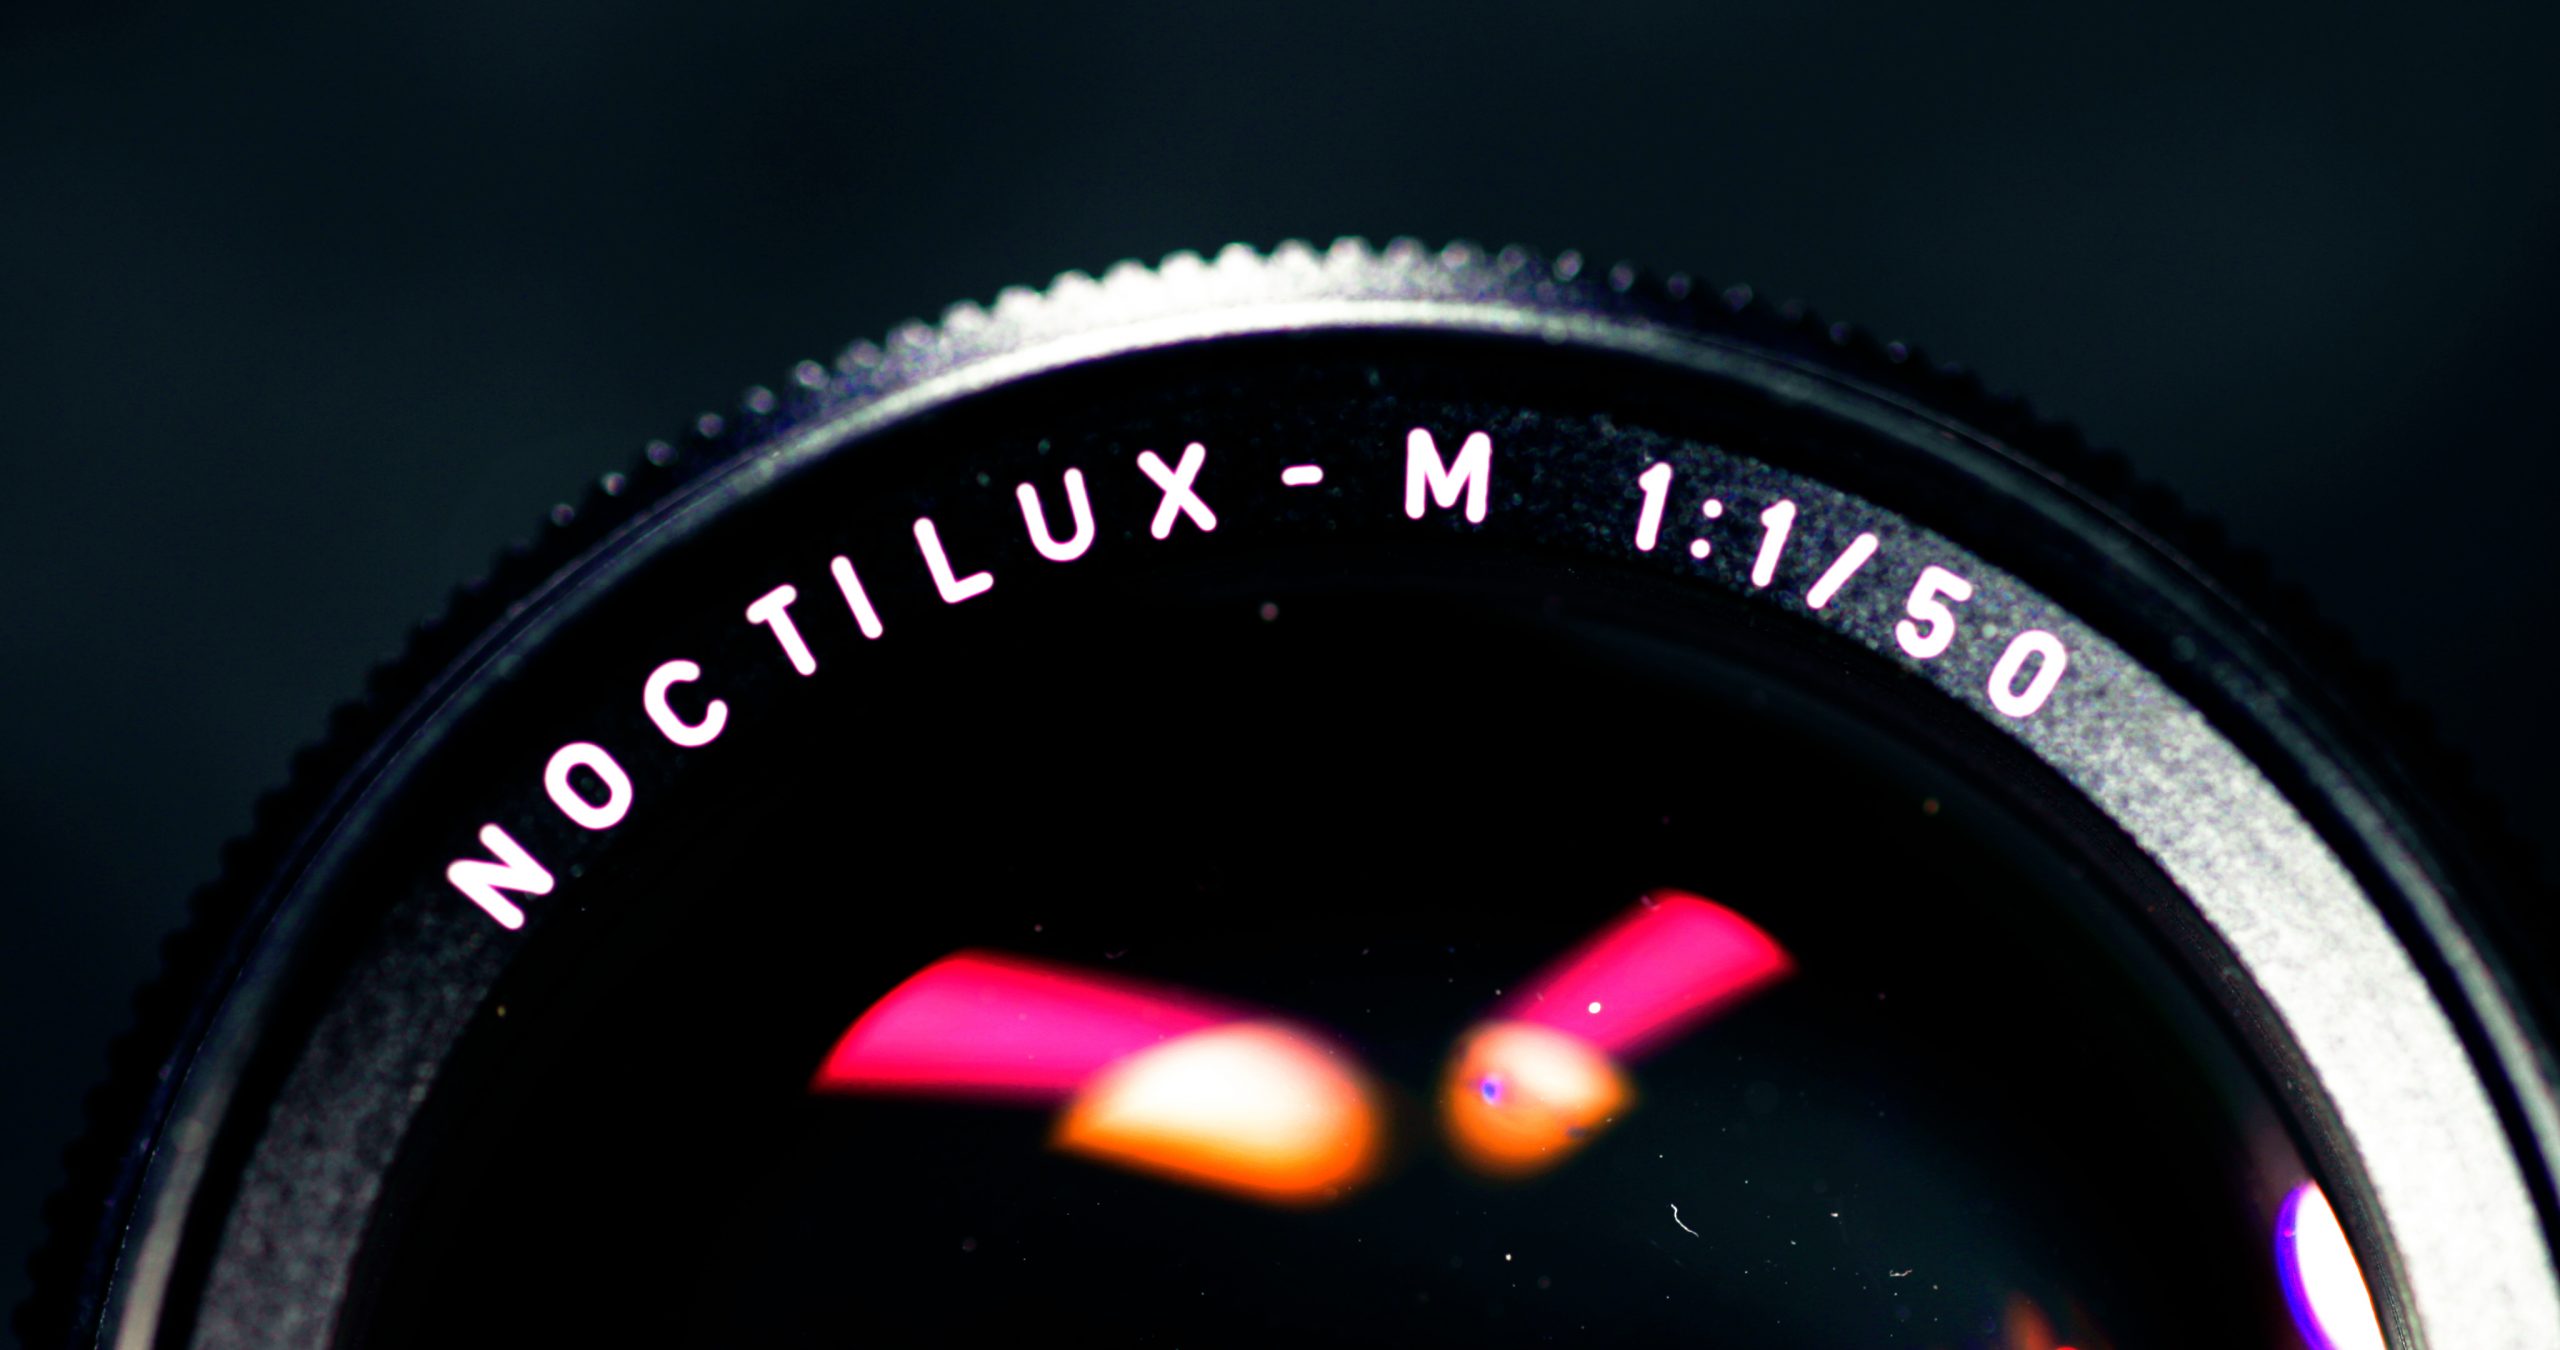 Leica Noctilux-M 50mm f/1.0 ASPH Lens Photography, Master Photographer Oz Yilmaz explains how to capture better photographs with Leica Noctilux-M 50mm lens.